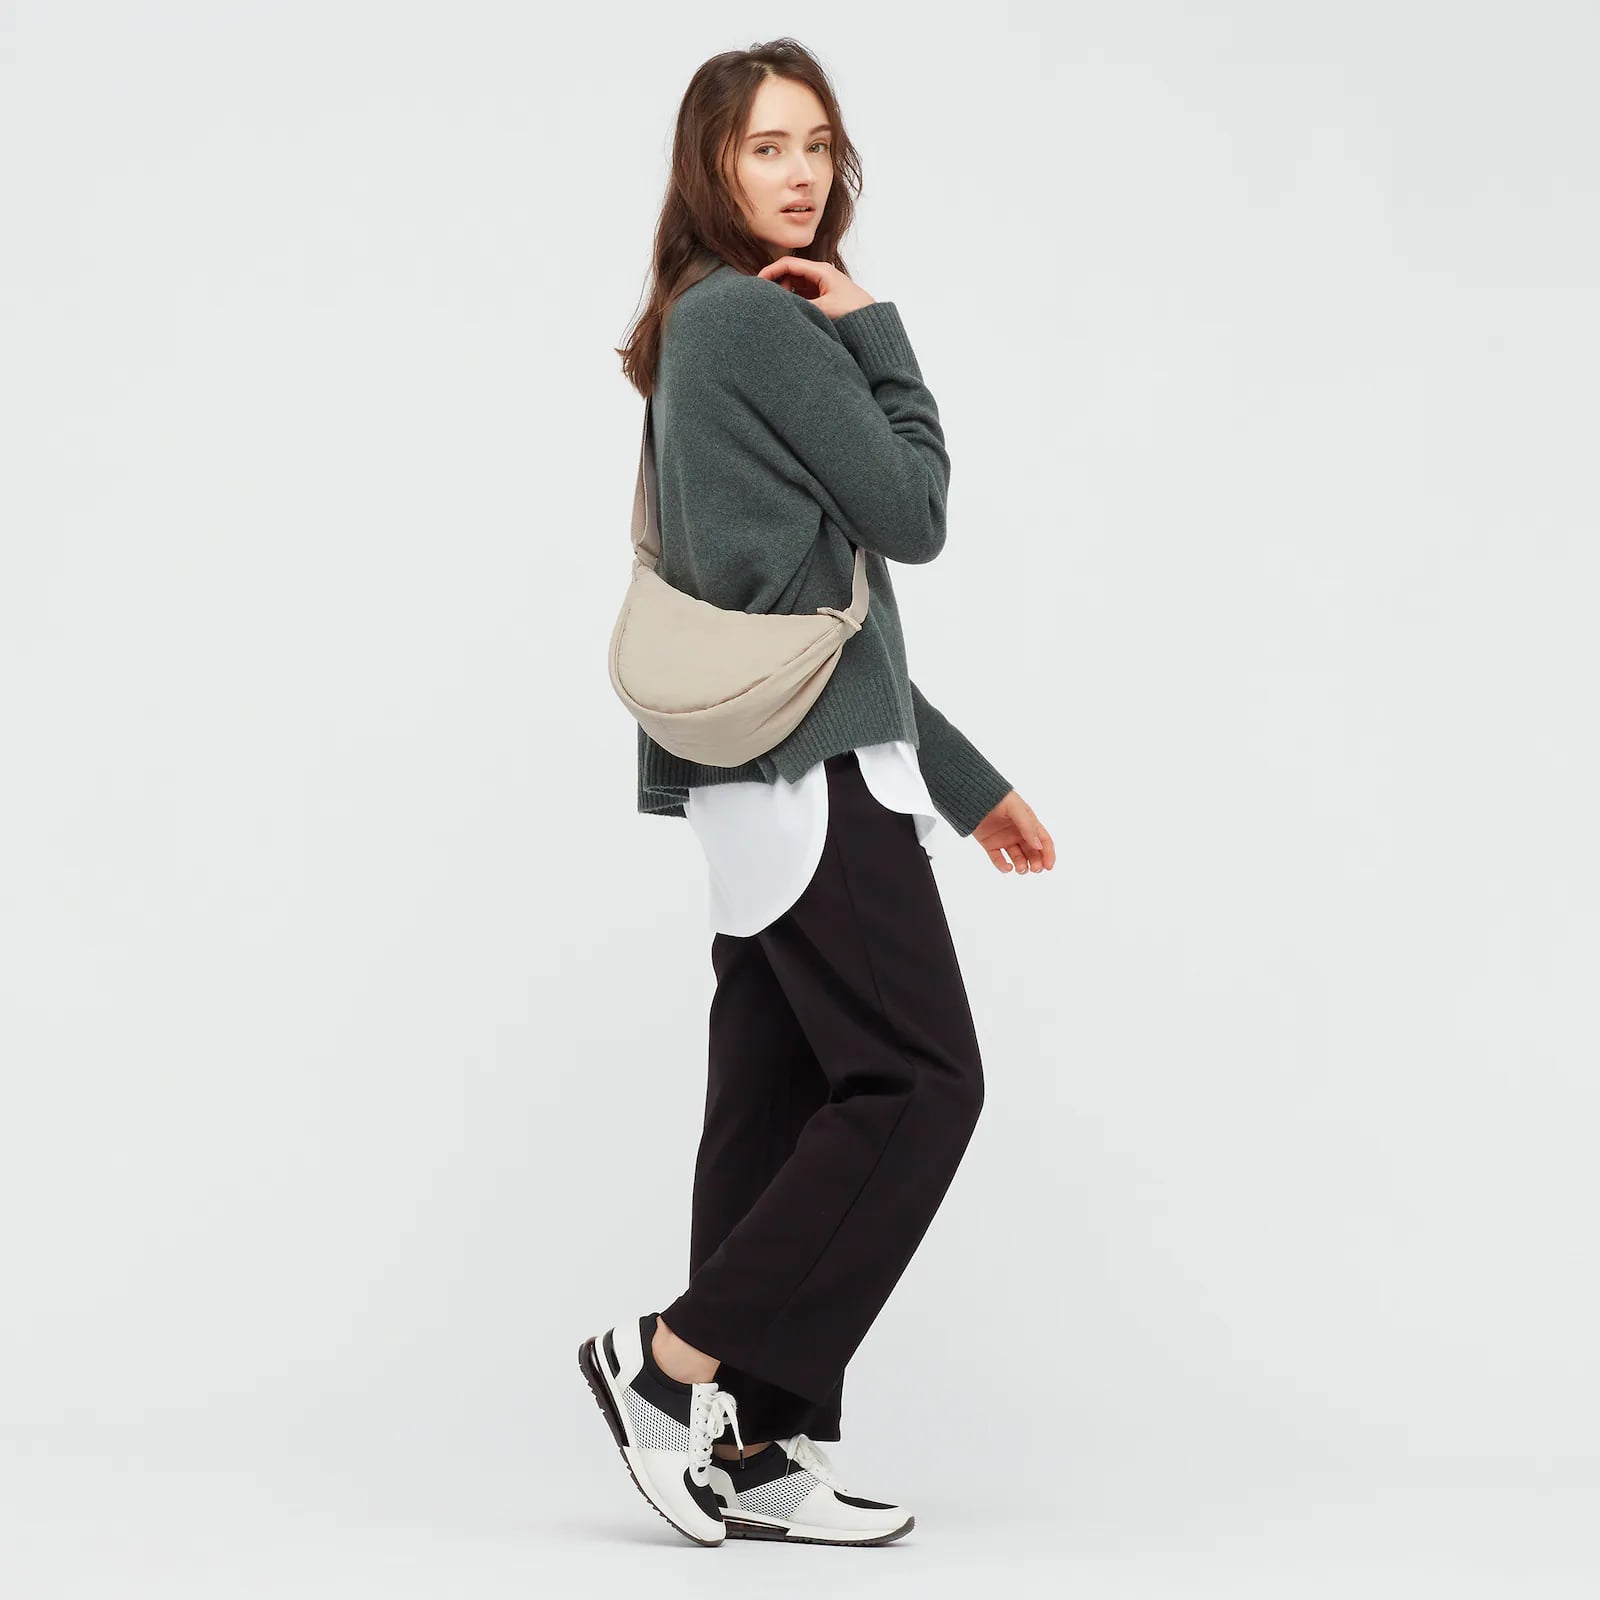 shoppers go wild for Uniqlo crossbody bag lookalike - a  budget-friendly fashion hit